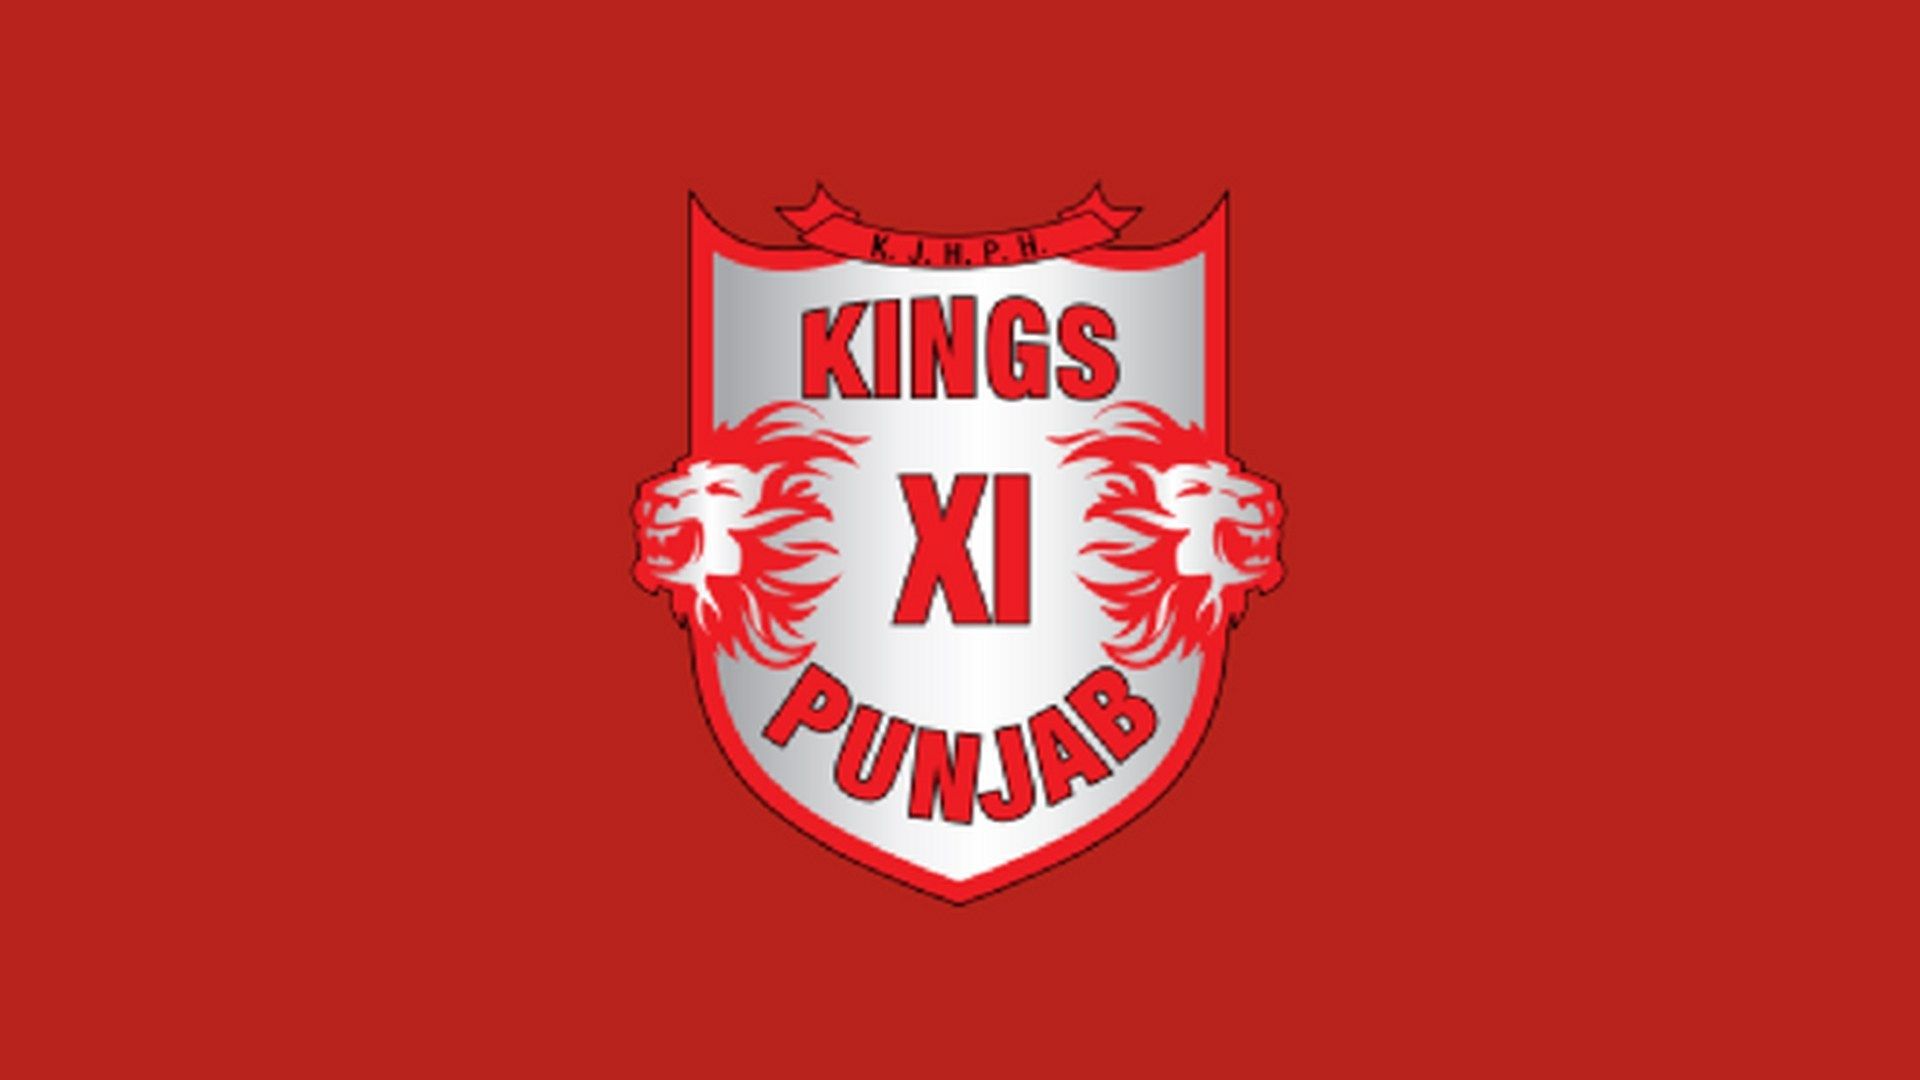 Punjab Kings Logo Wallpapers Wallpaper Cave